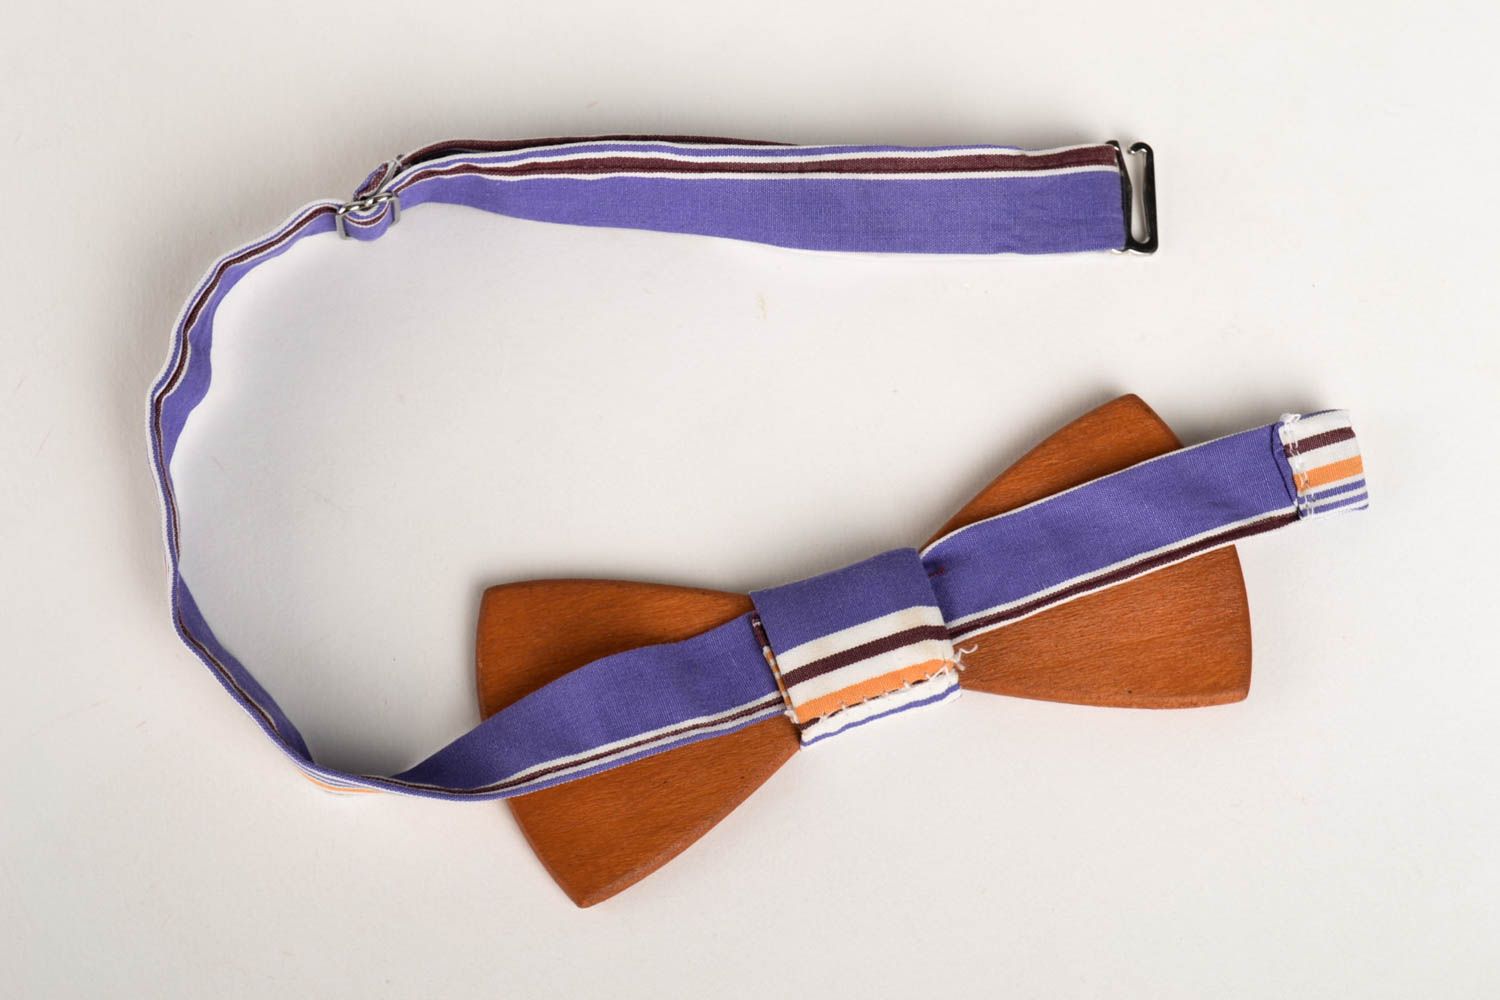 Unusual handmade wooden bow tie gentlemen only best gifts for him wood craft photo 2